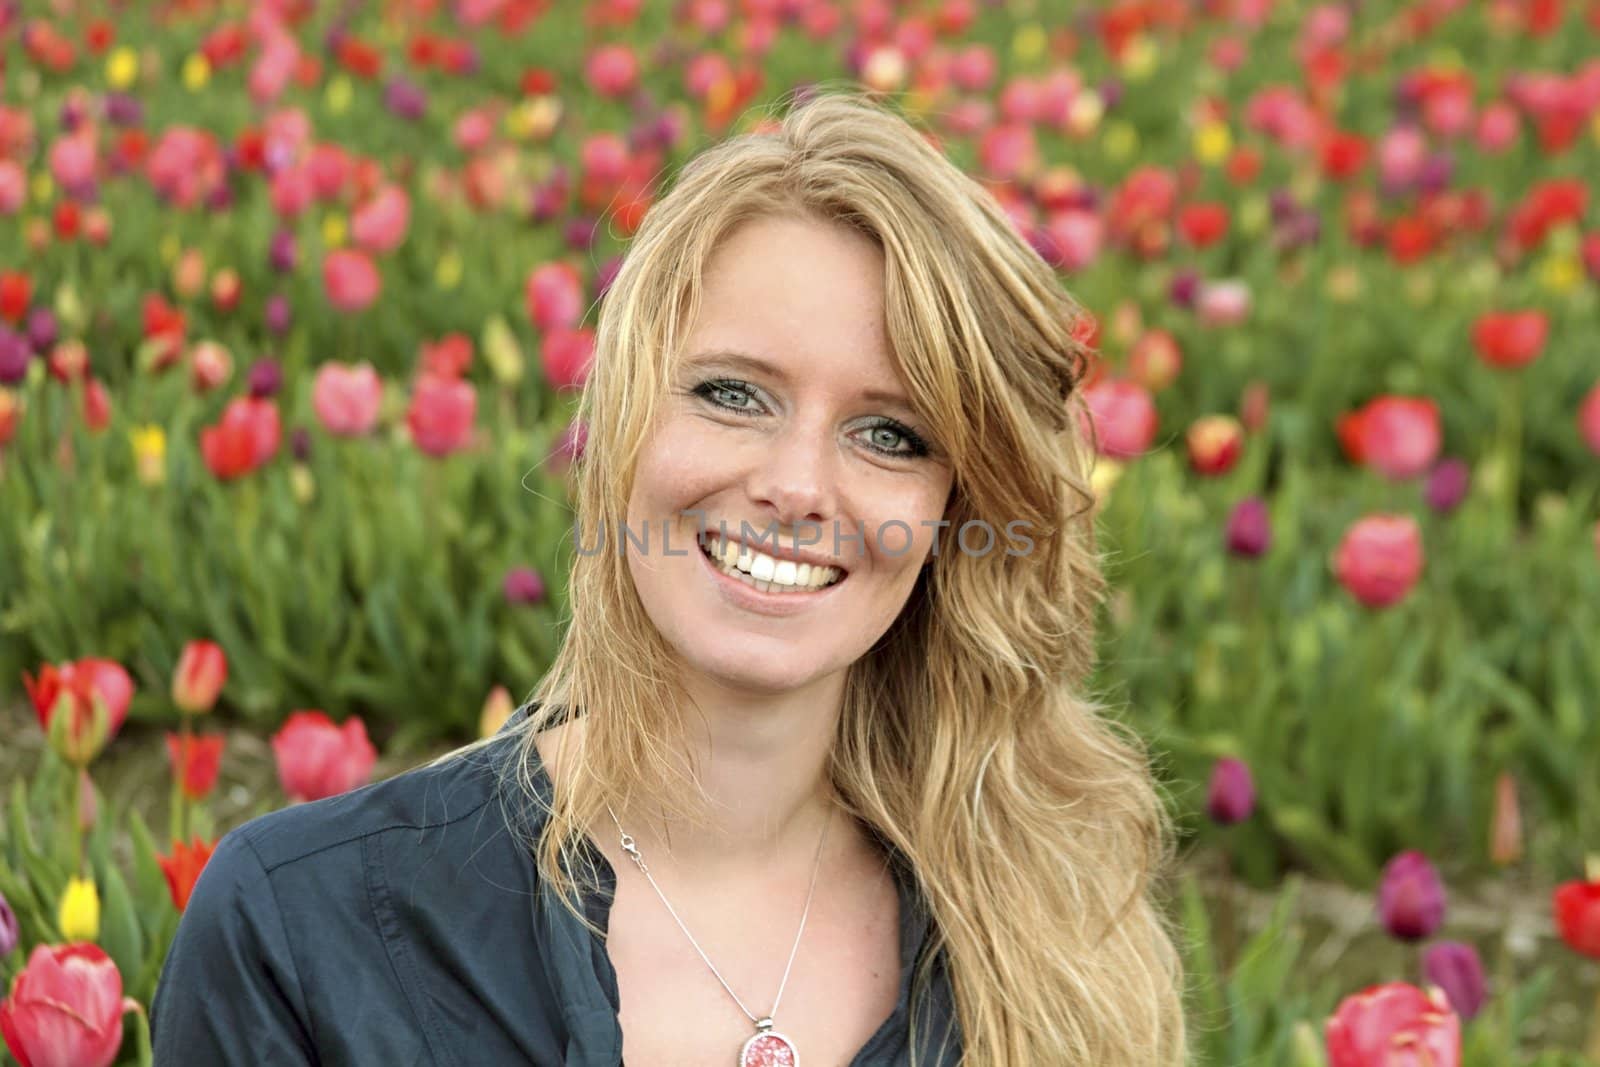 Dutch woman between the flower fields in the Netherlands